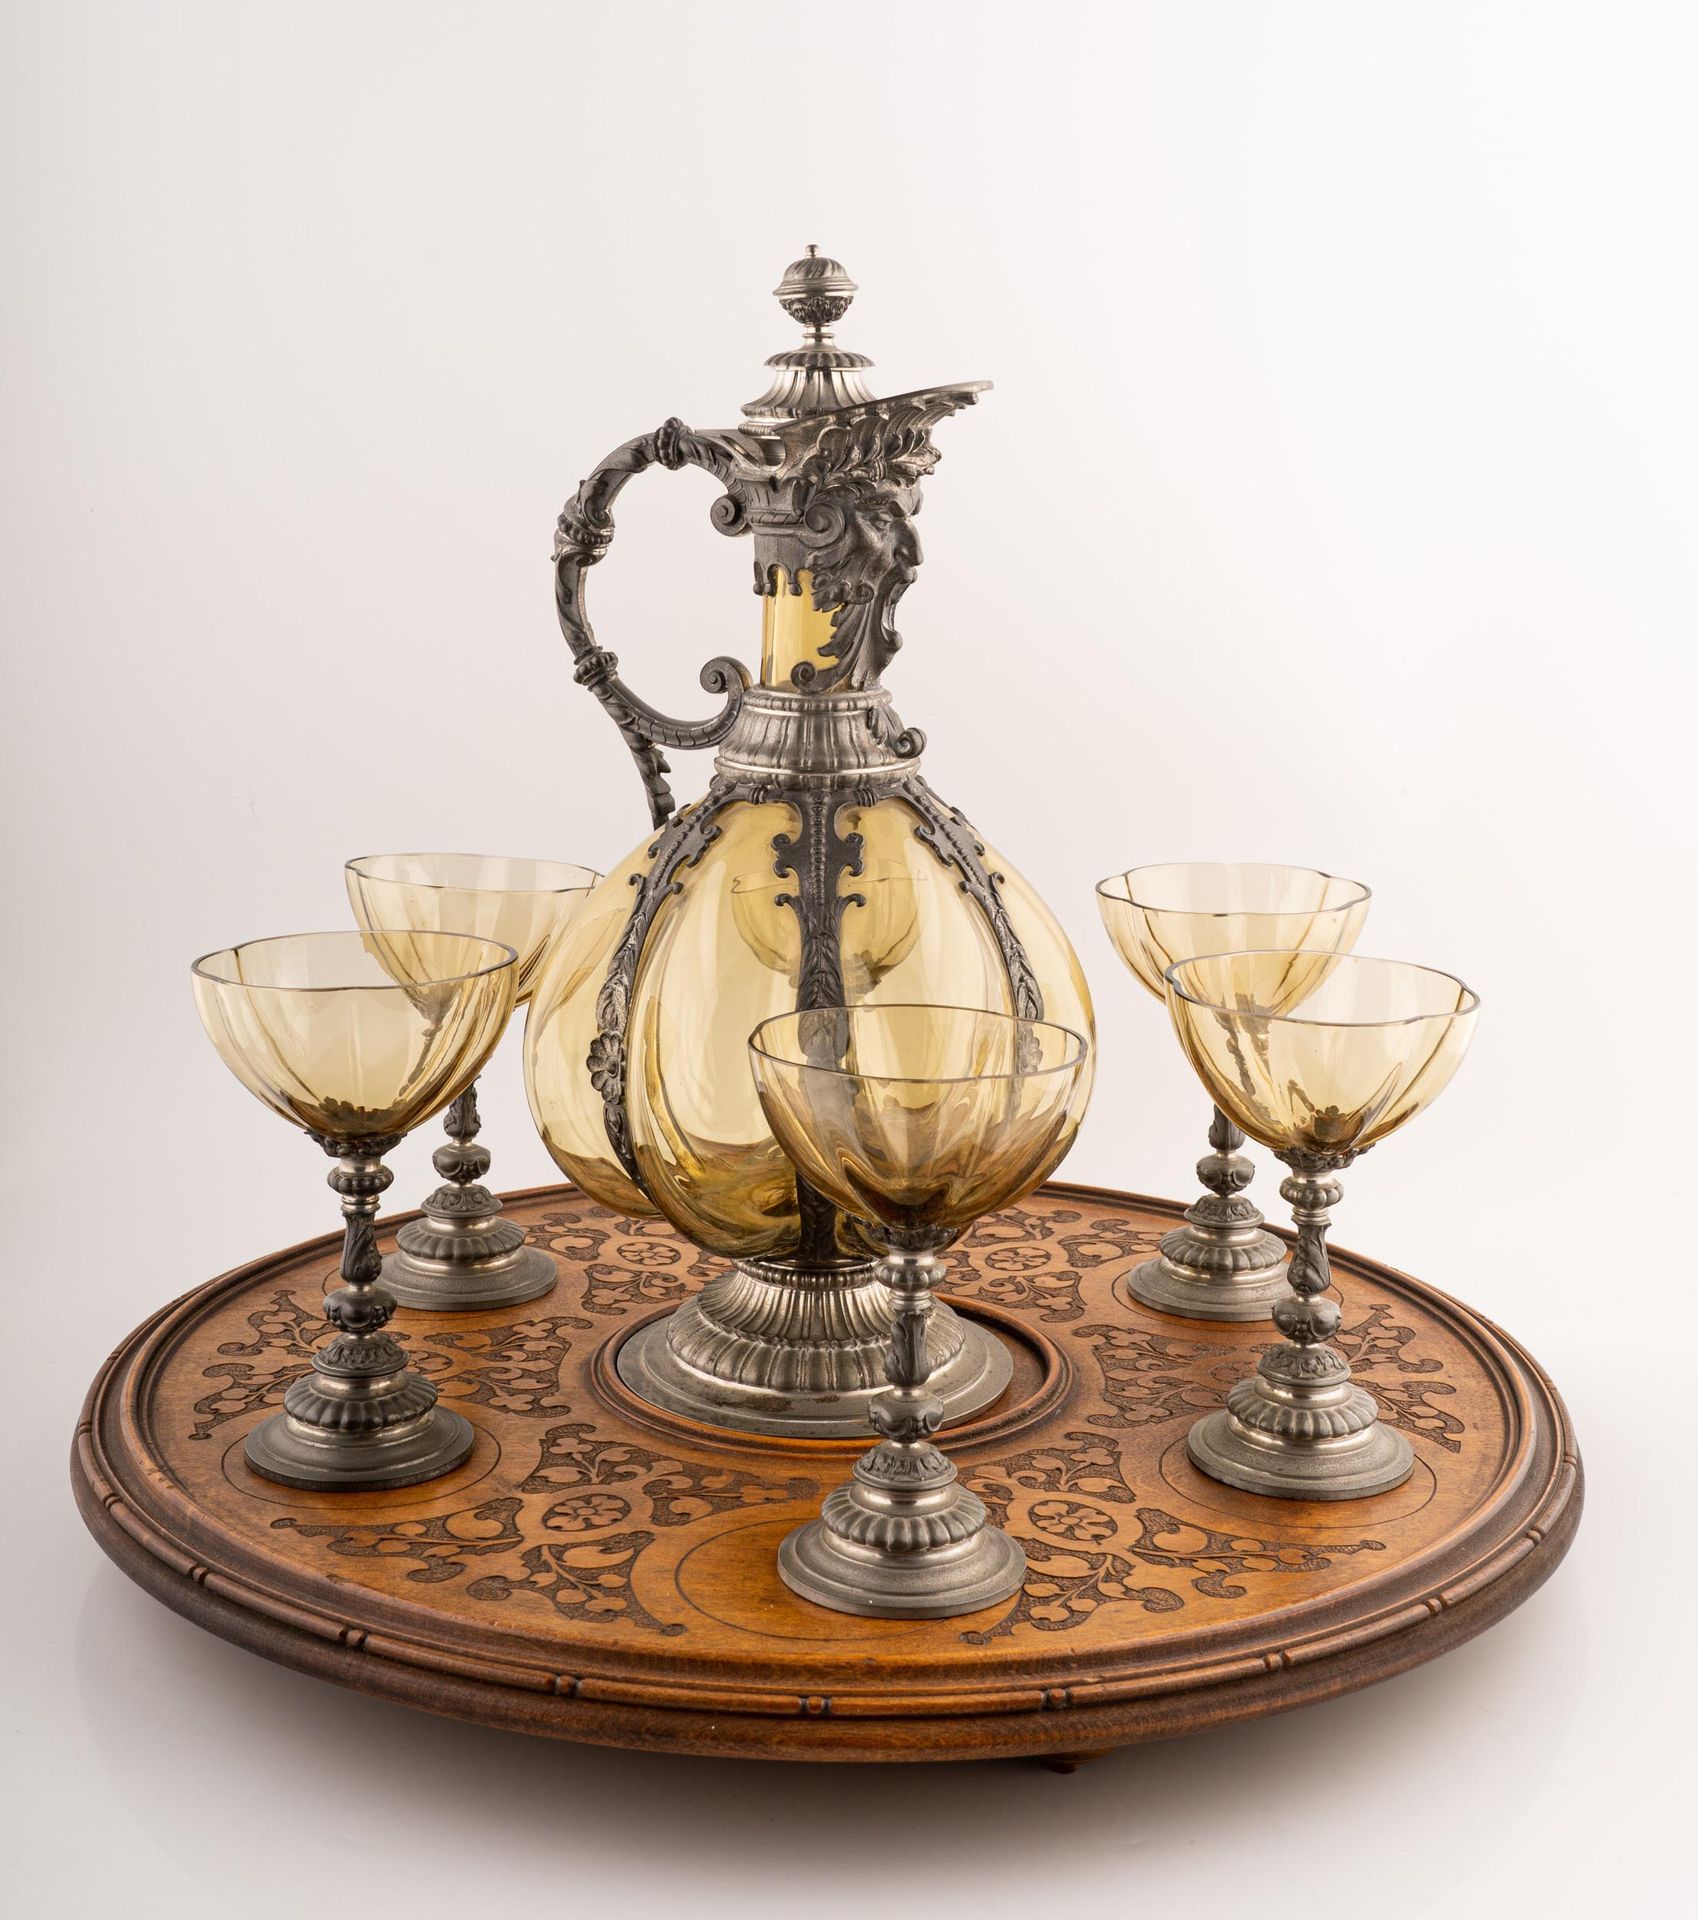 Null 套装包括玻璃托盘、咖啡壶和6个杯子


19世纪末


直径眼镜 cm 9